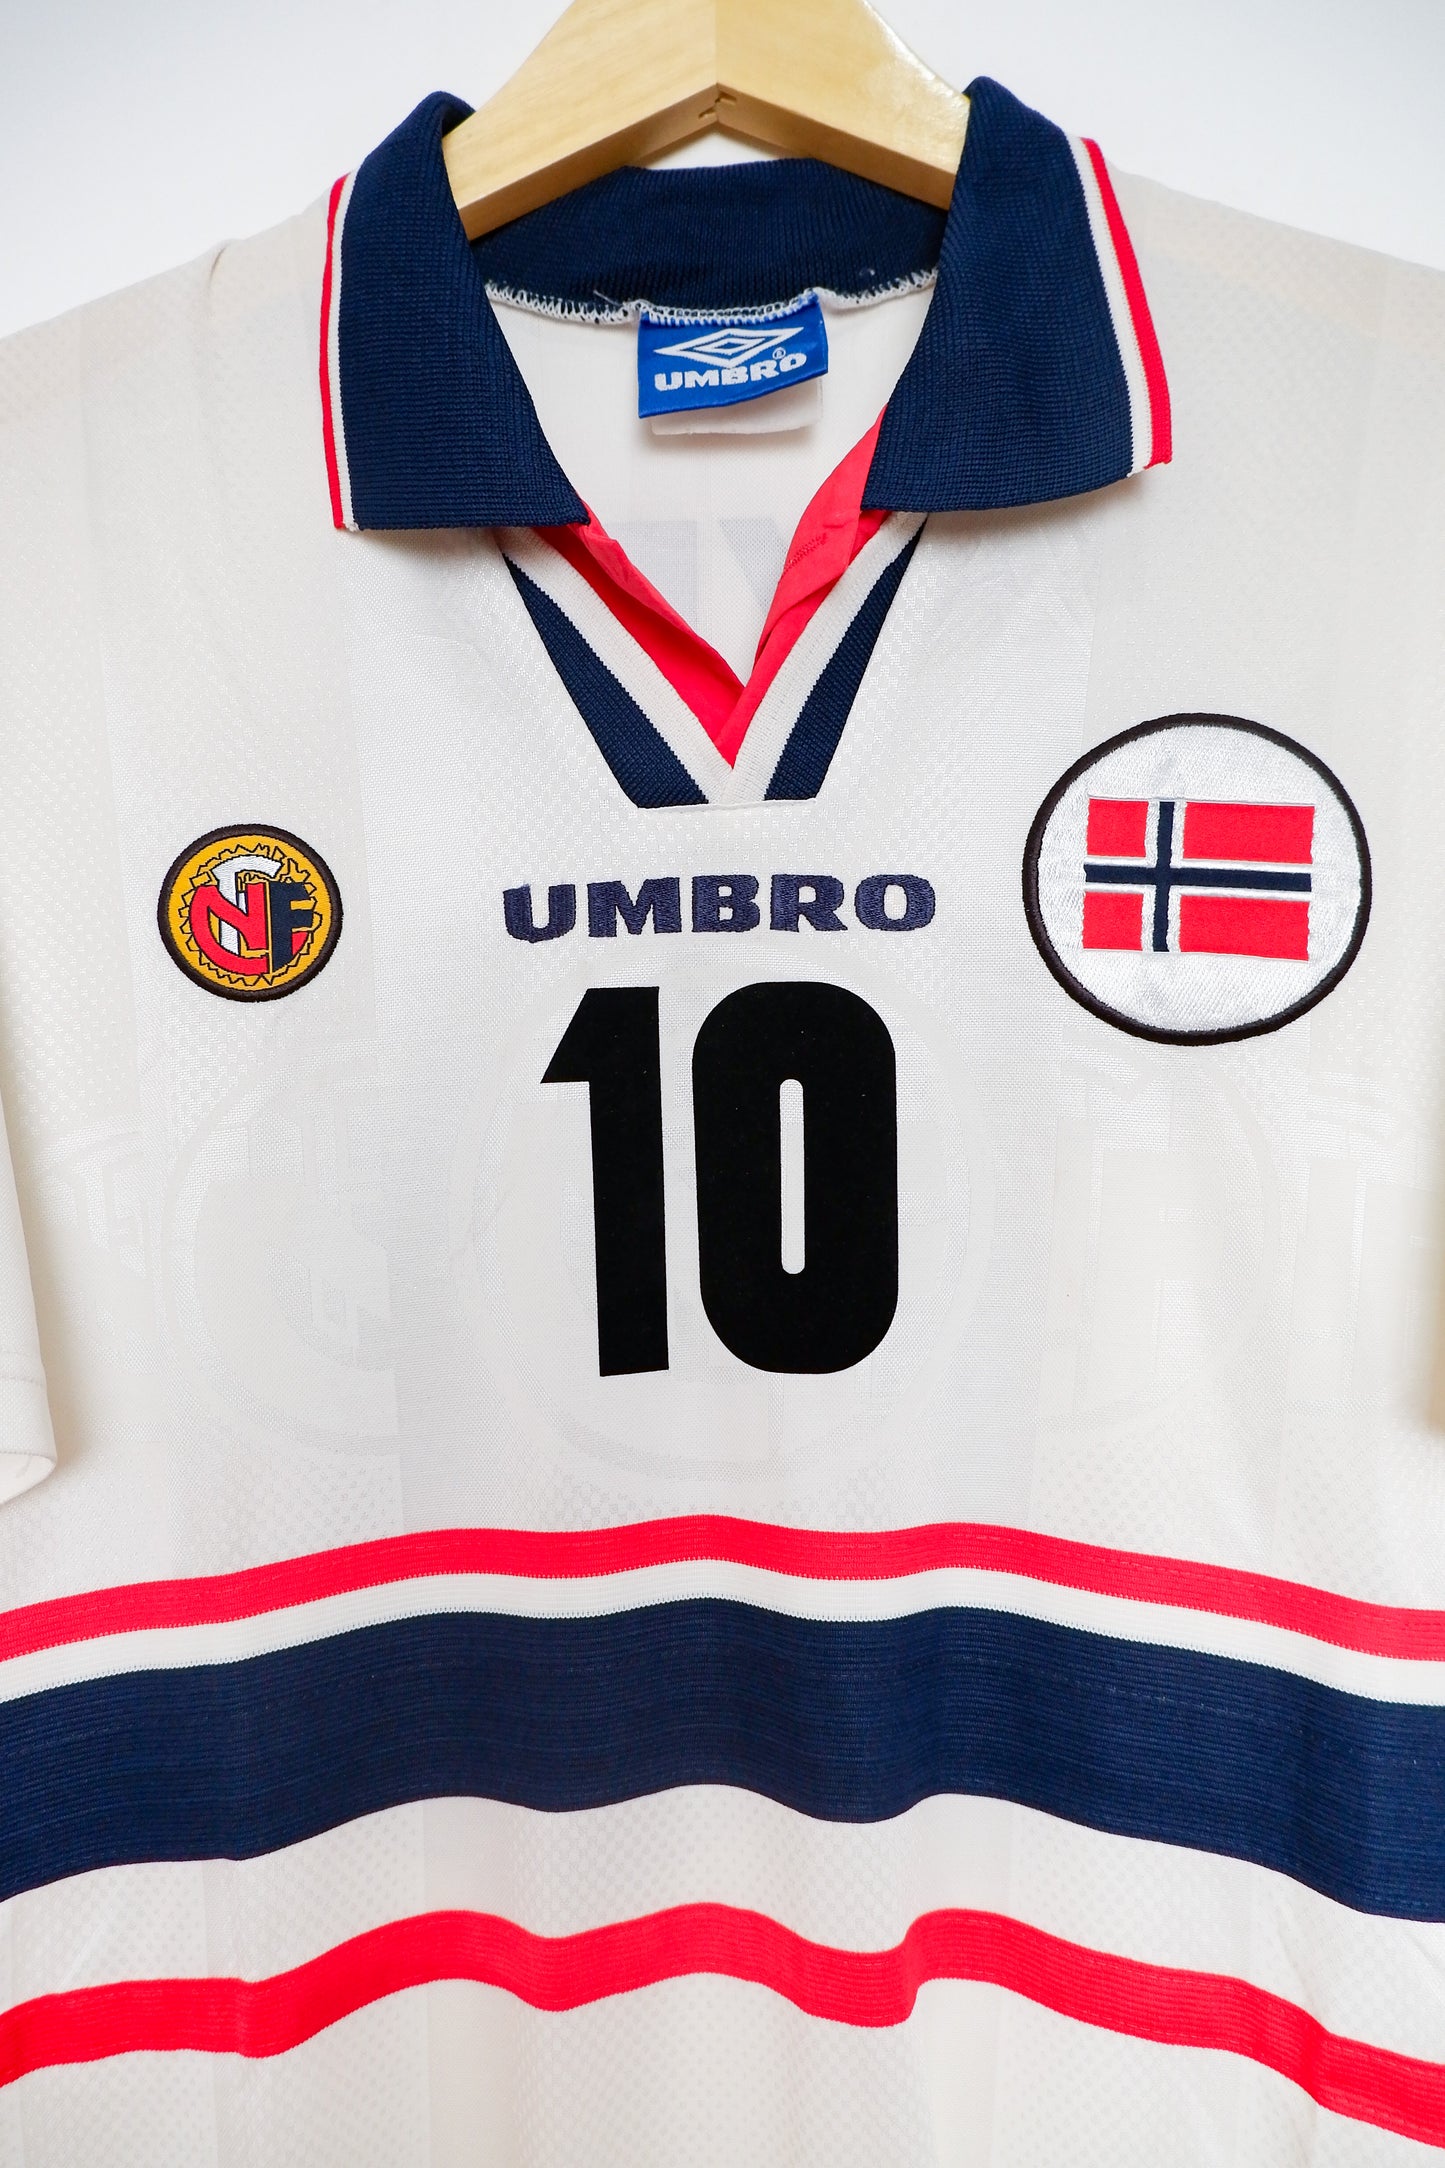 Authentic Norway 1998 - Kjetil Rekdal #10 Size M